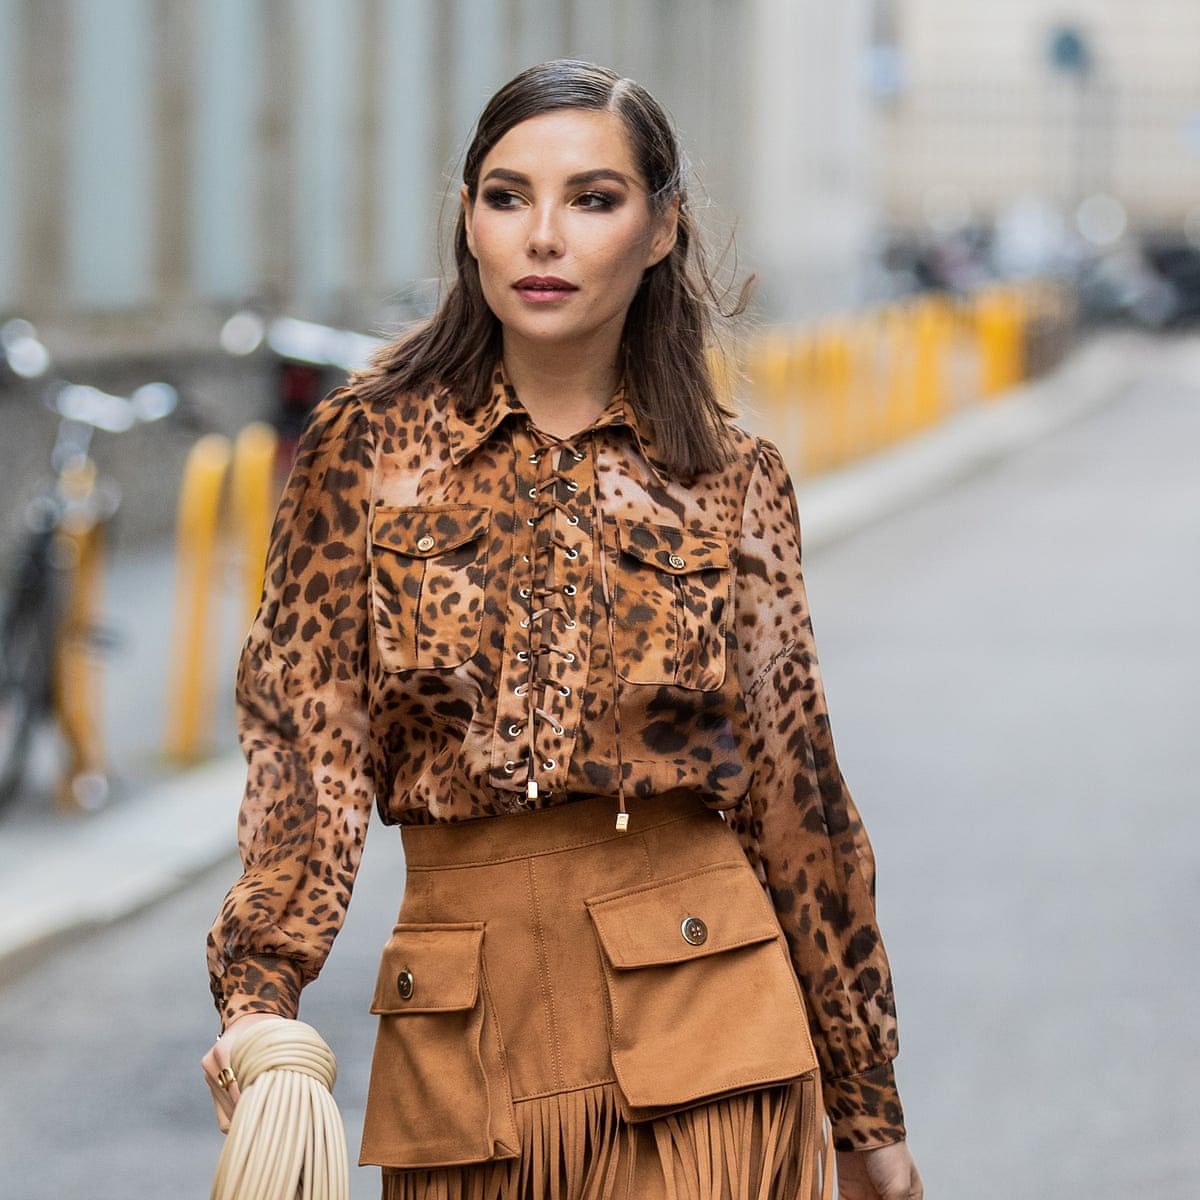 Russian fashion blogger showcasing her unique style